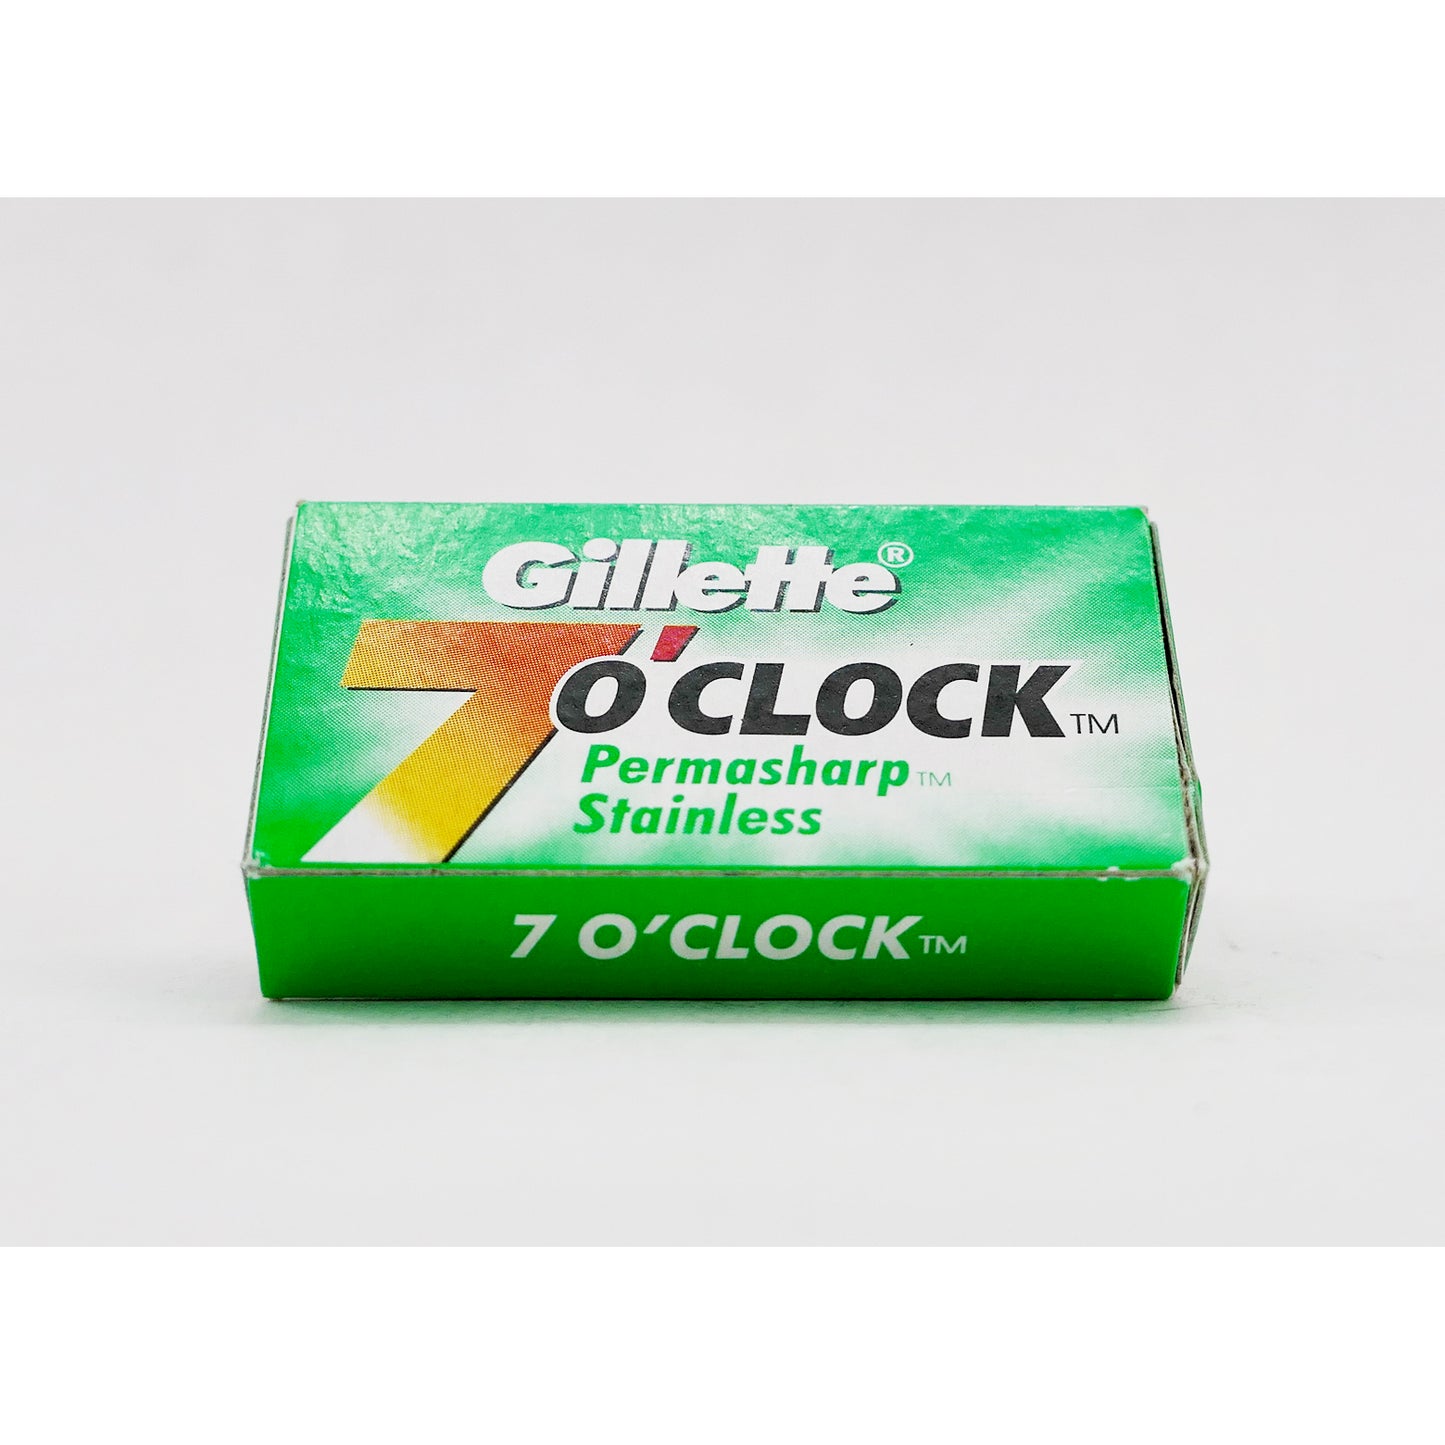 Gillette 7 o'clock Permasharp (Green)  Double Edge Razor Blades (10 Pk)